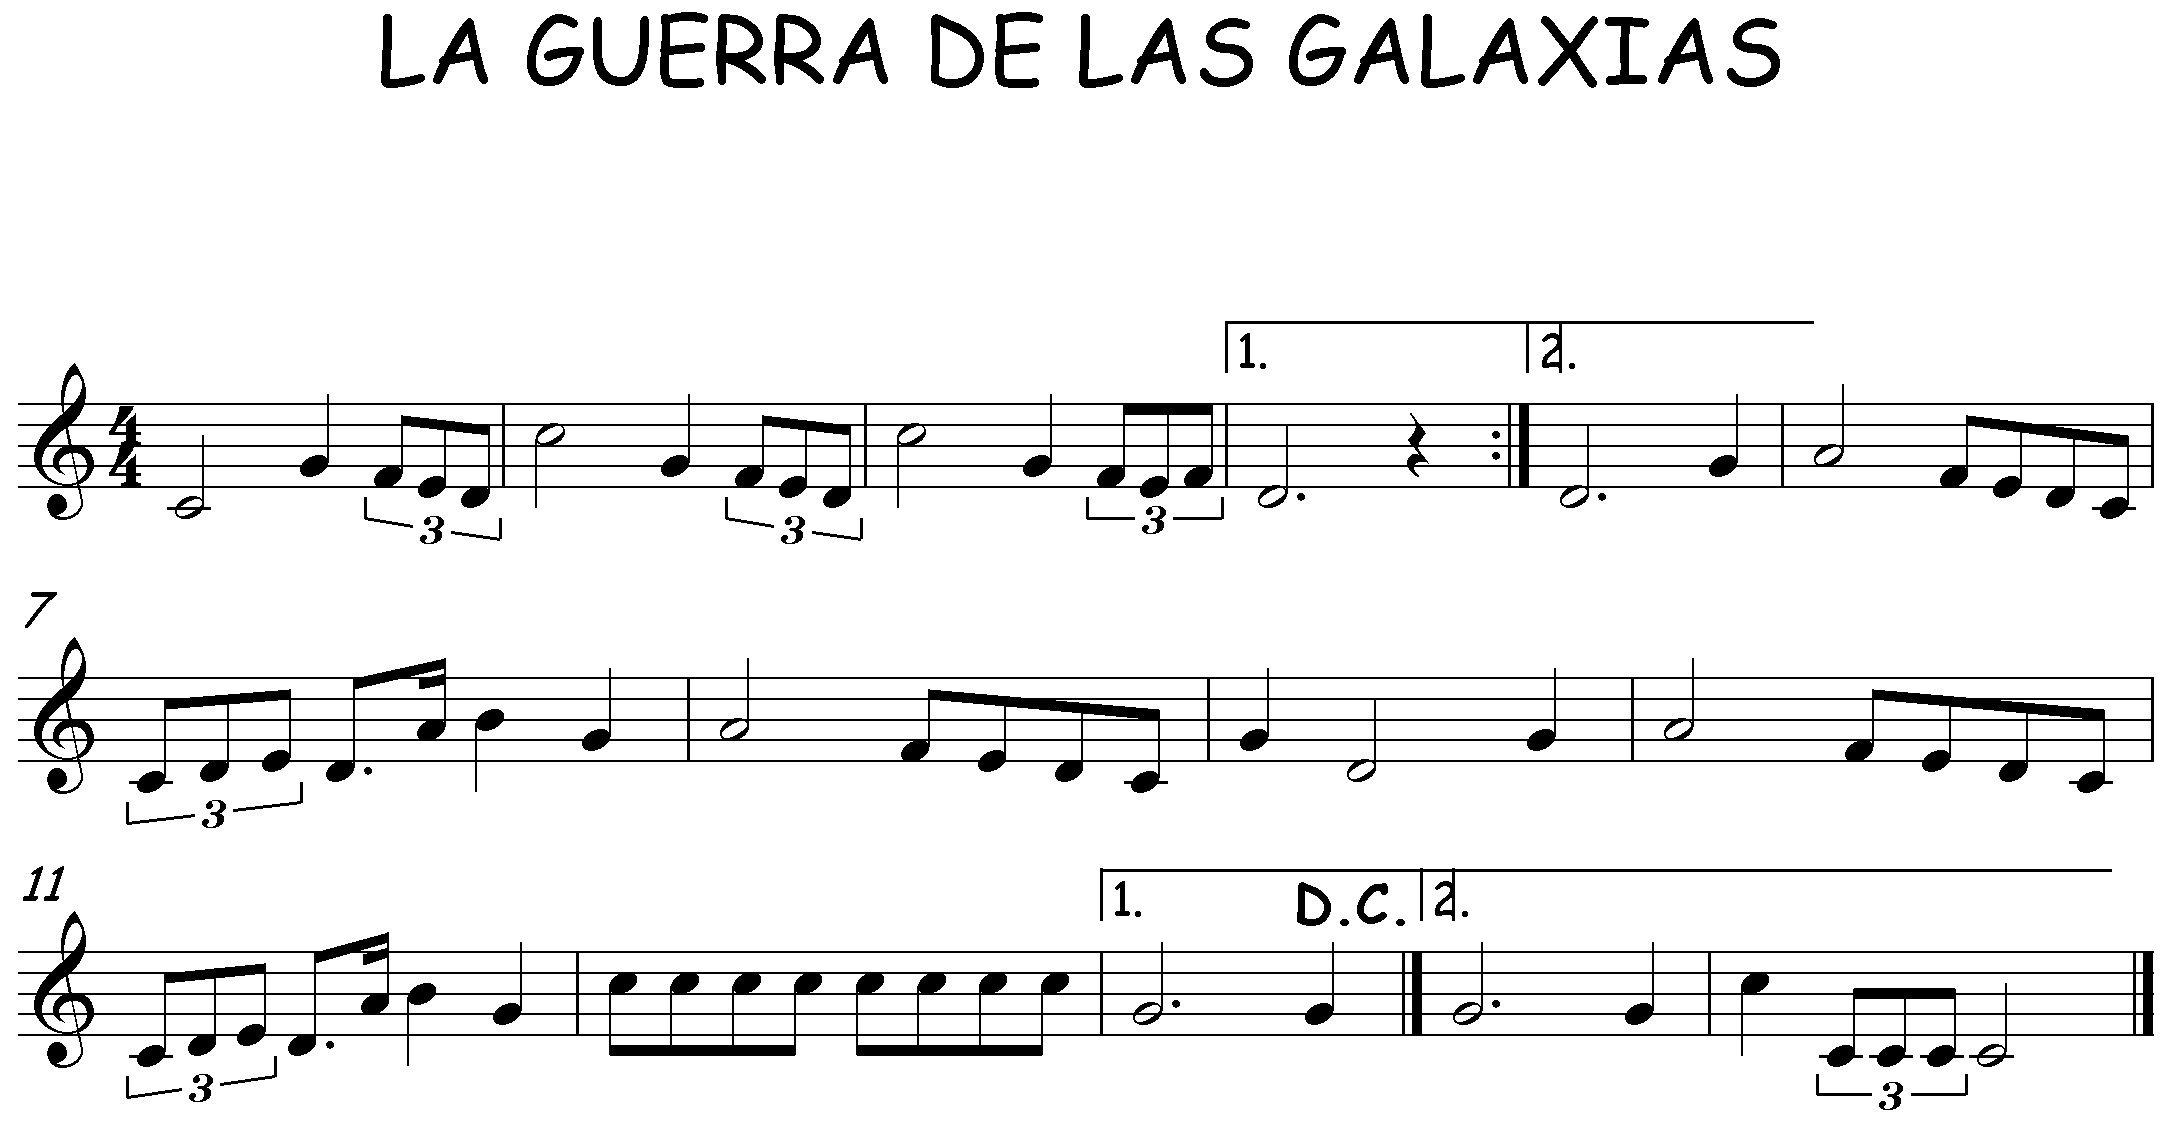 https://musilerena93.files.wordpress.com/2012/11/la-guerra-de-las-galaxias.jpg